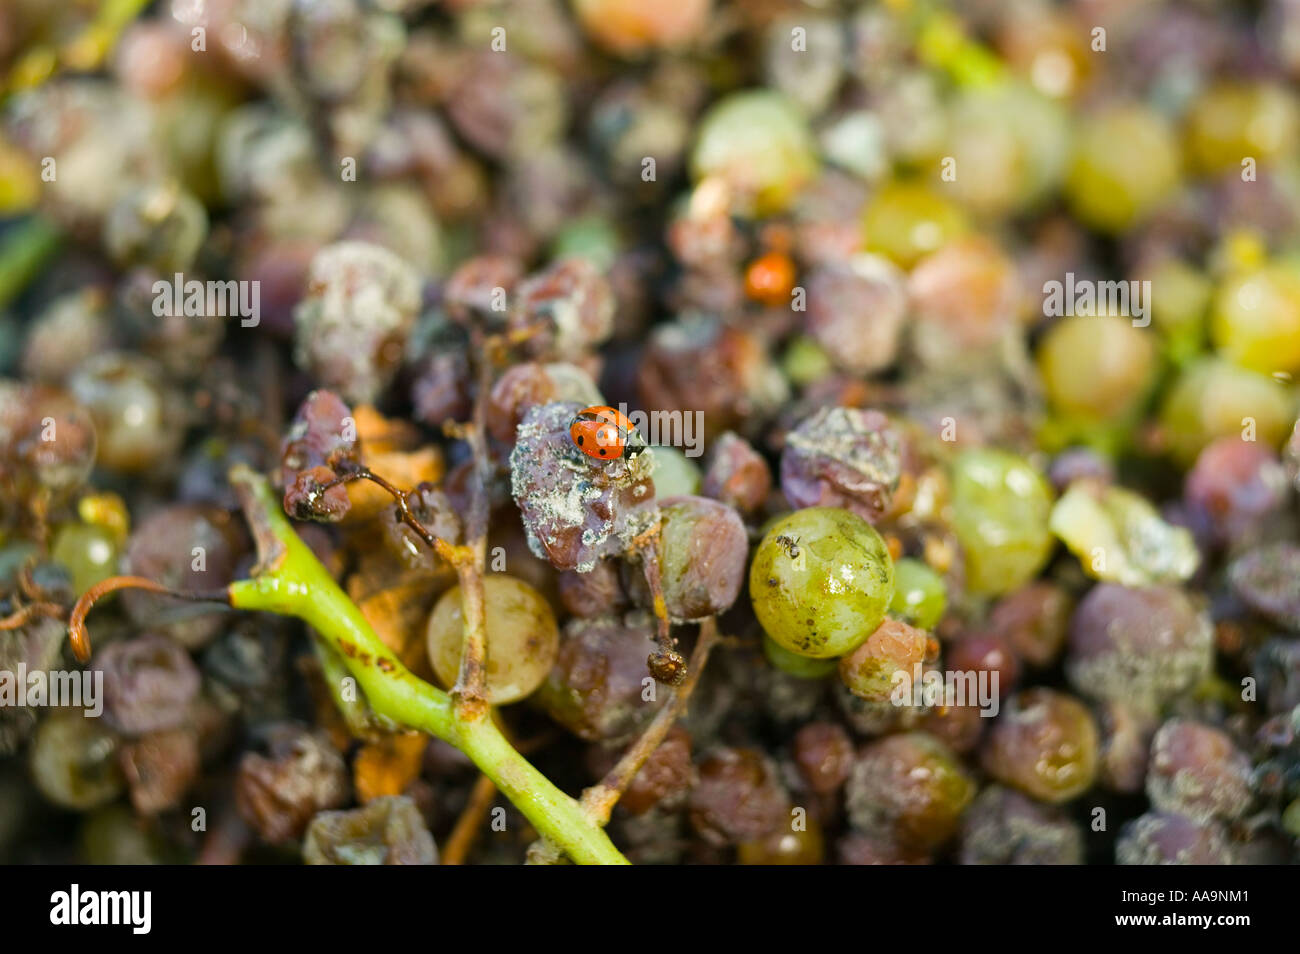 Ecovin ladybird noble rot grapes organic wine Stock Photo